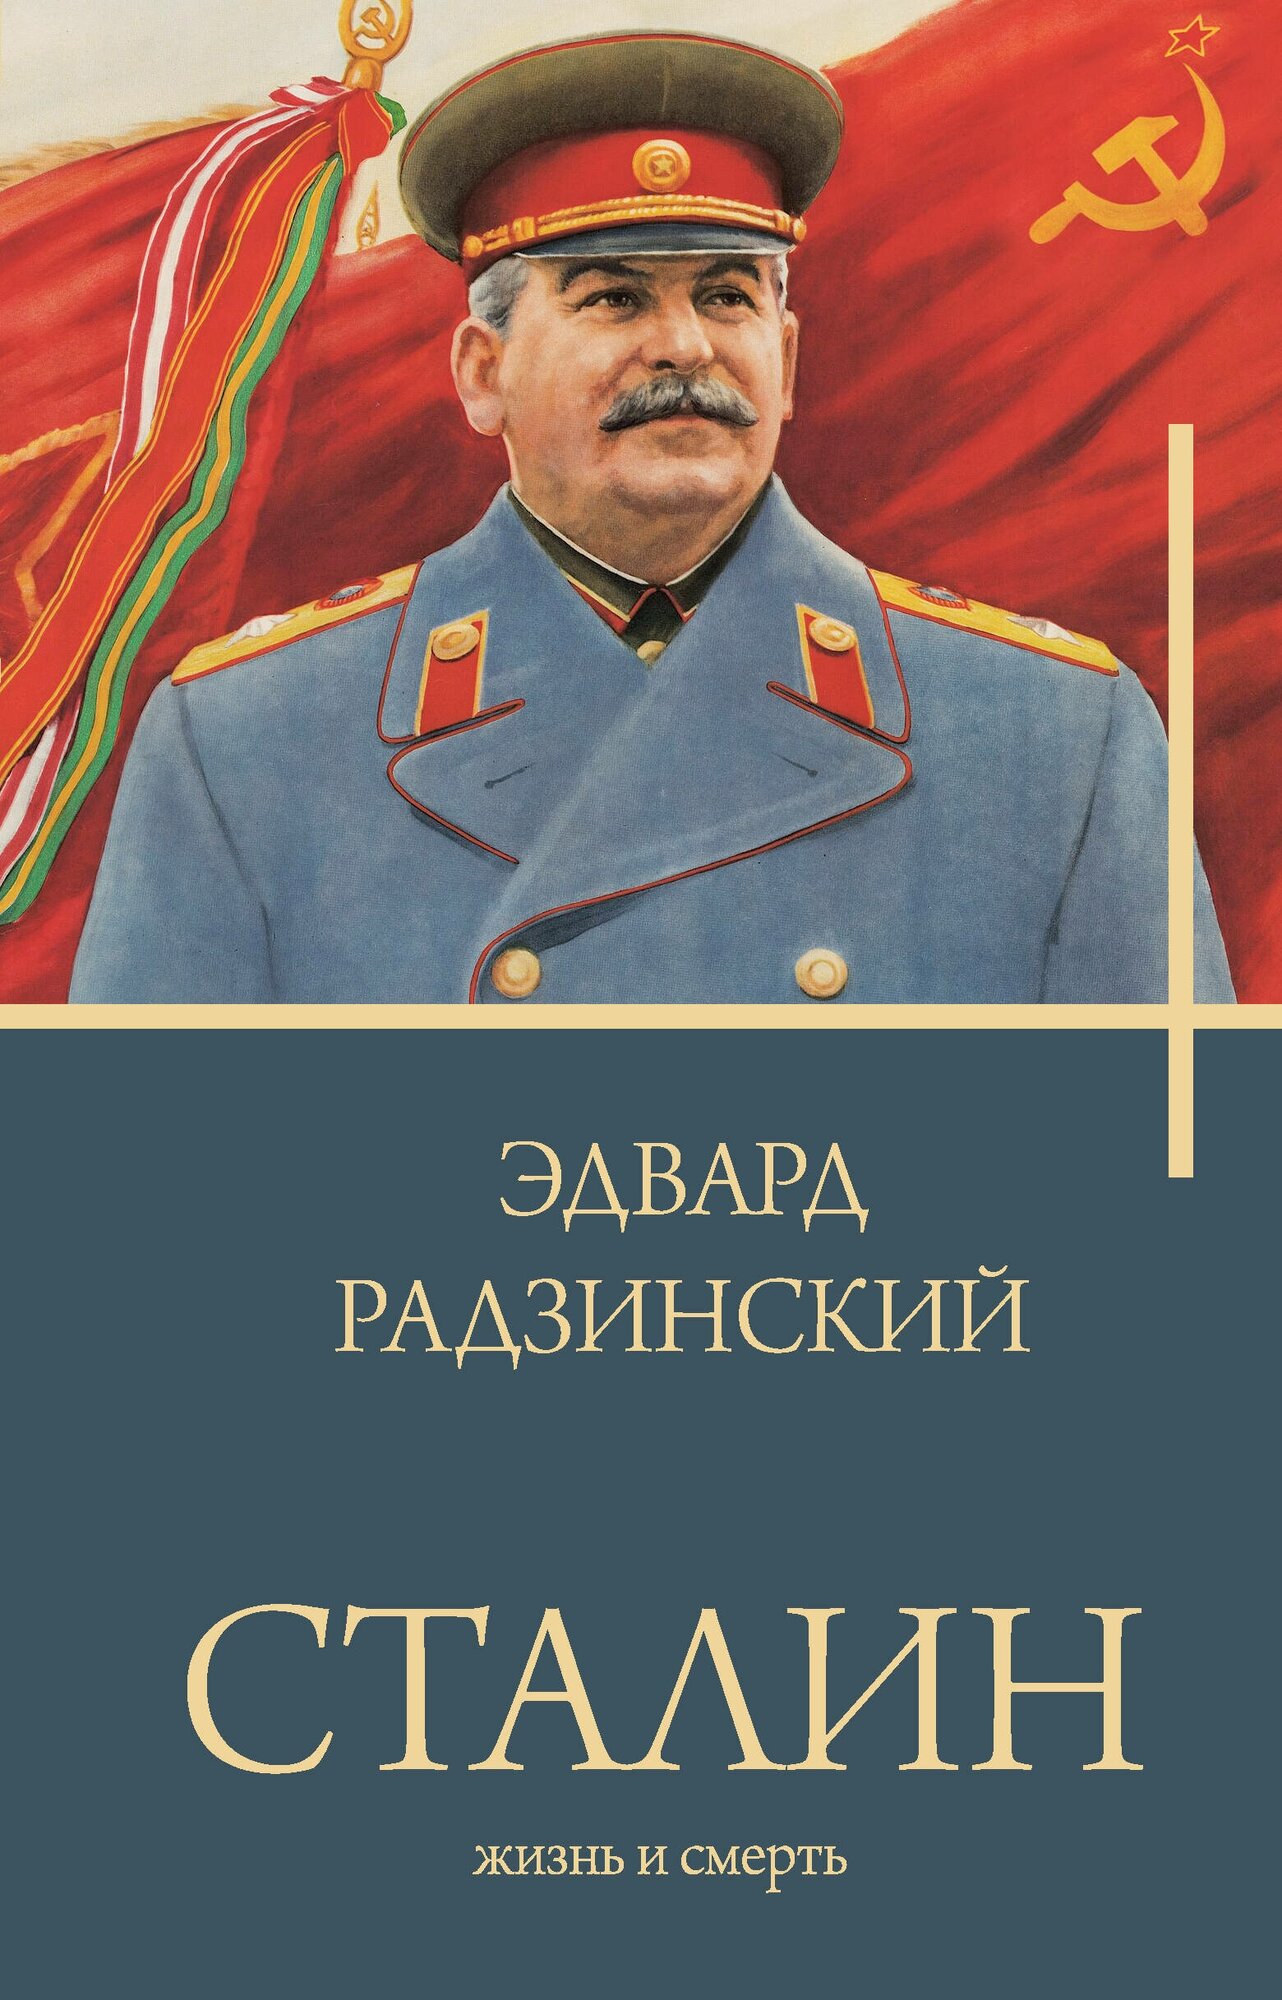 Сталин (Радзинский Эдвард Станиславович) - фото №1